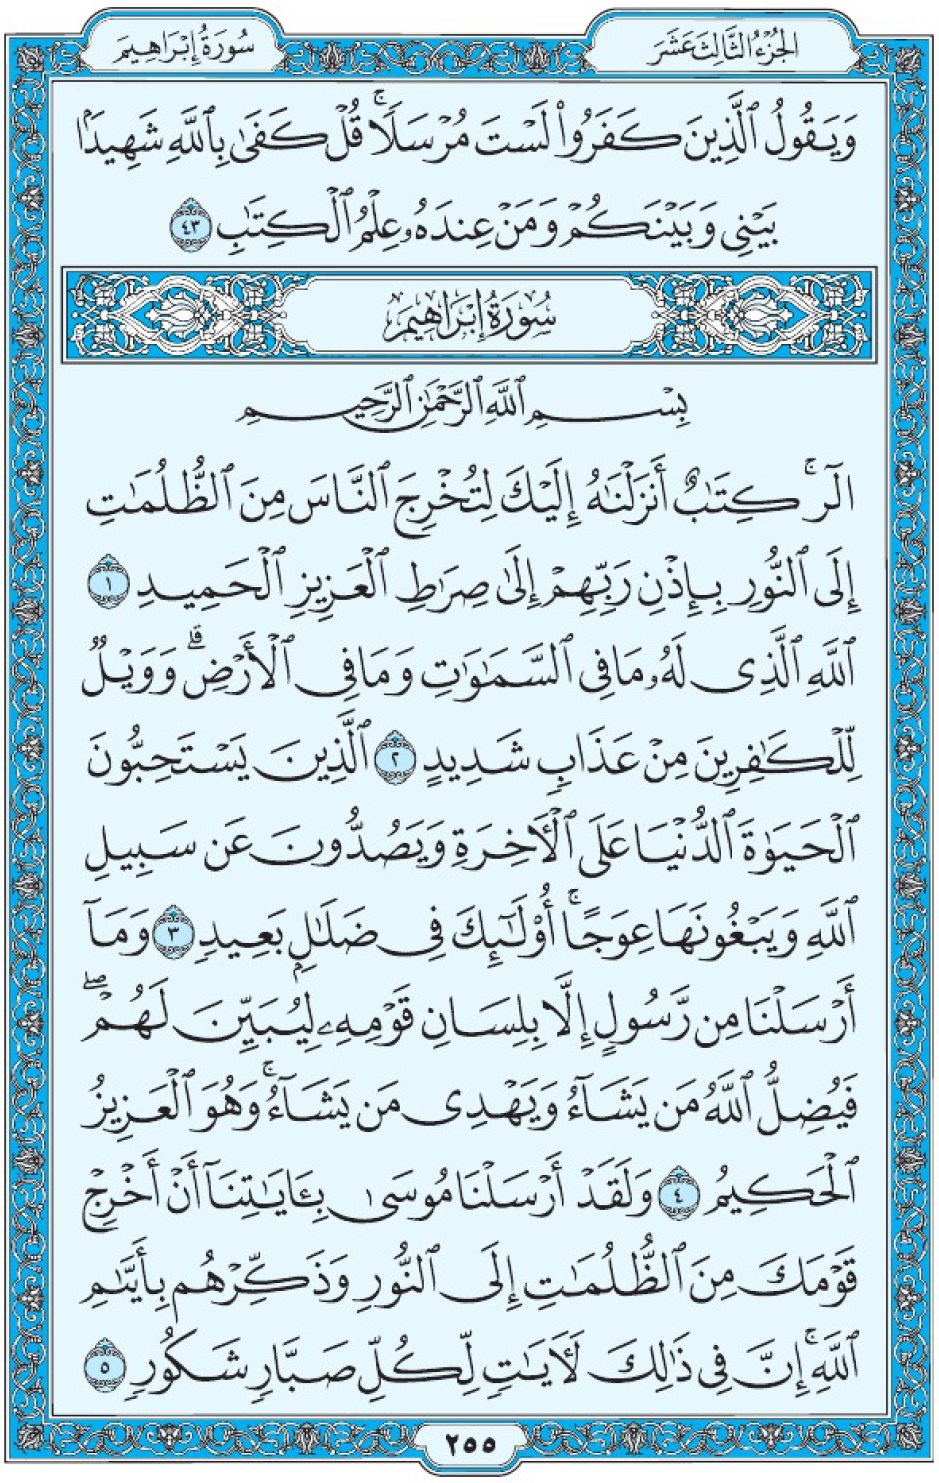 Коран Мединский мусхаф страница 255, сура 14 Ибрахим سورة ١٤ إبراهيم 